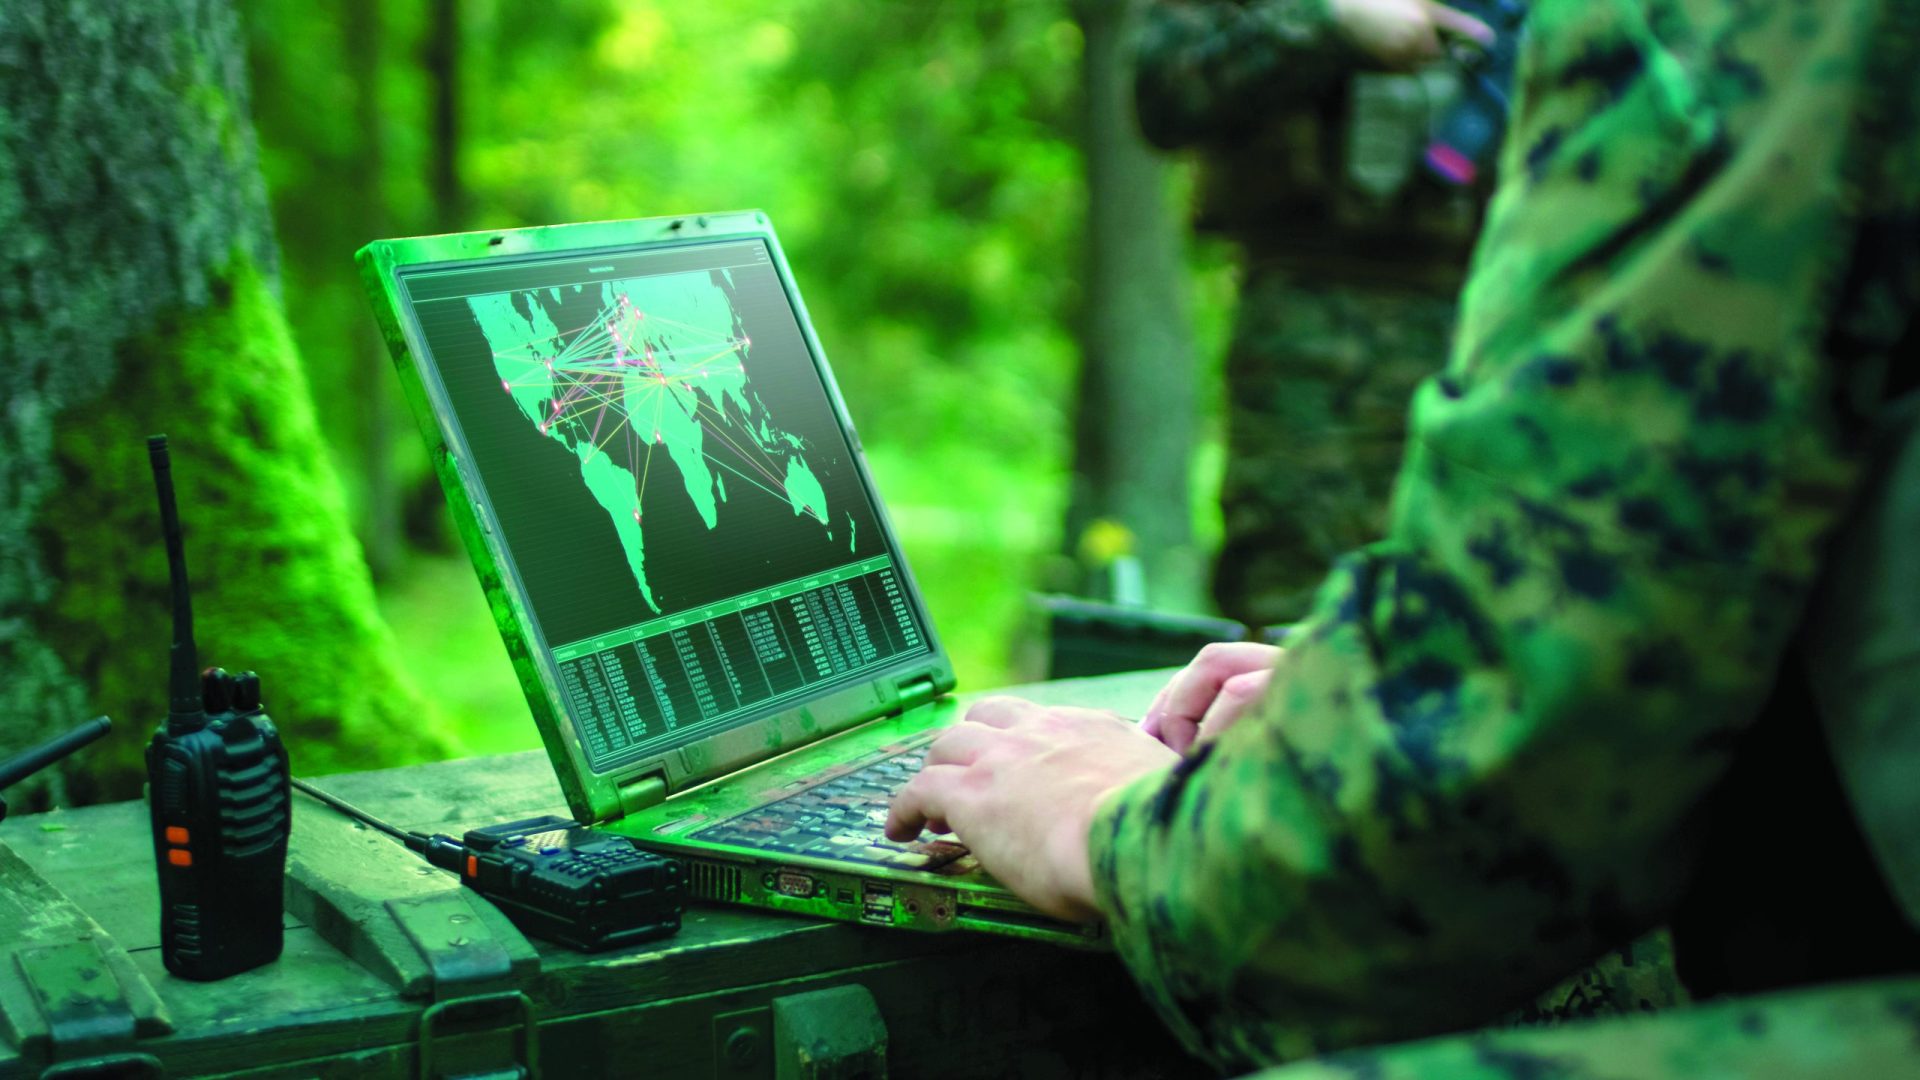 Cibersegurança. Exército testa pela primeira vez capacidade de resposta a ciberataques